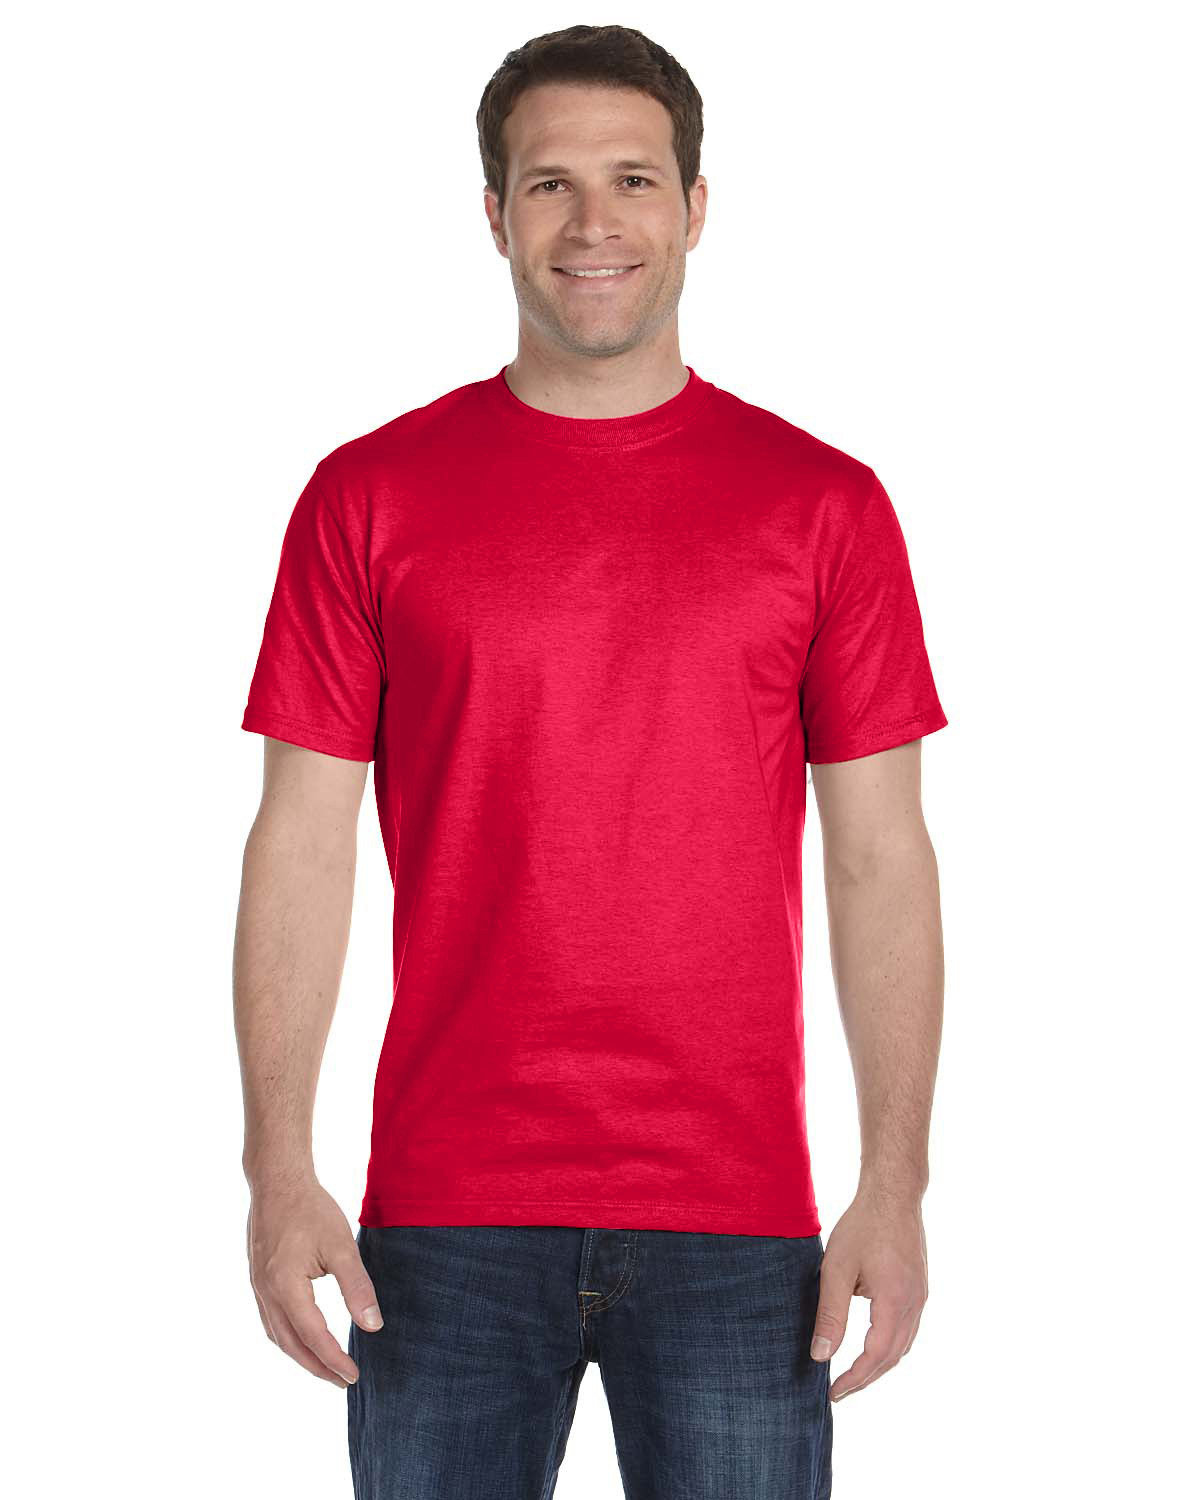 Gildan Adult 50/50 T-Shirt SPRT SCARLET RED 